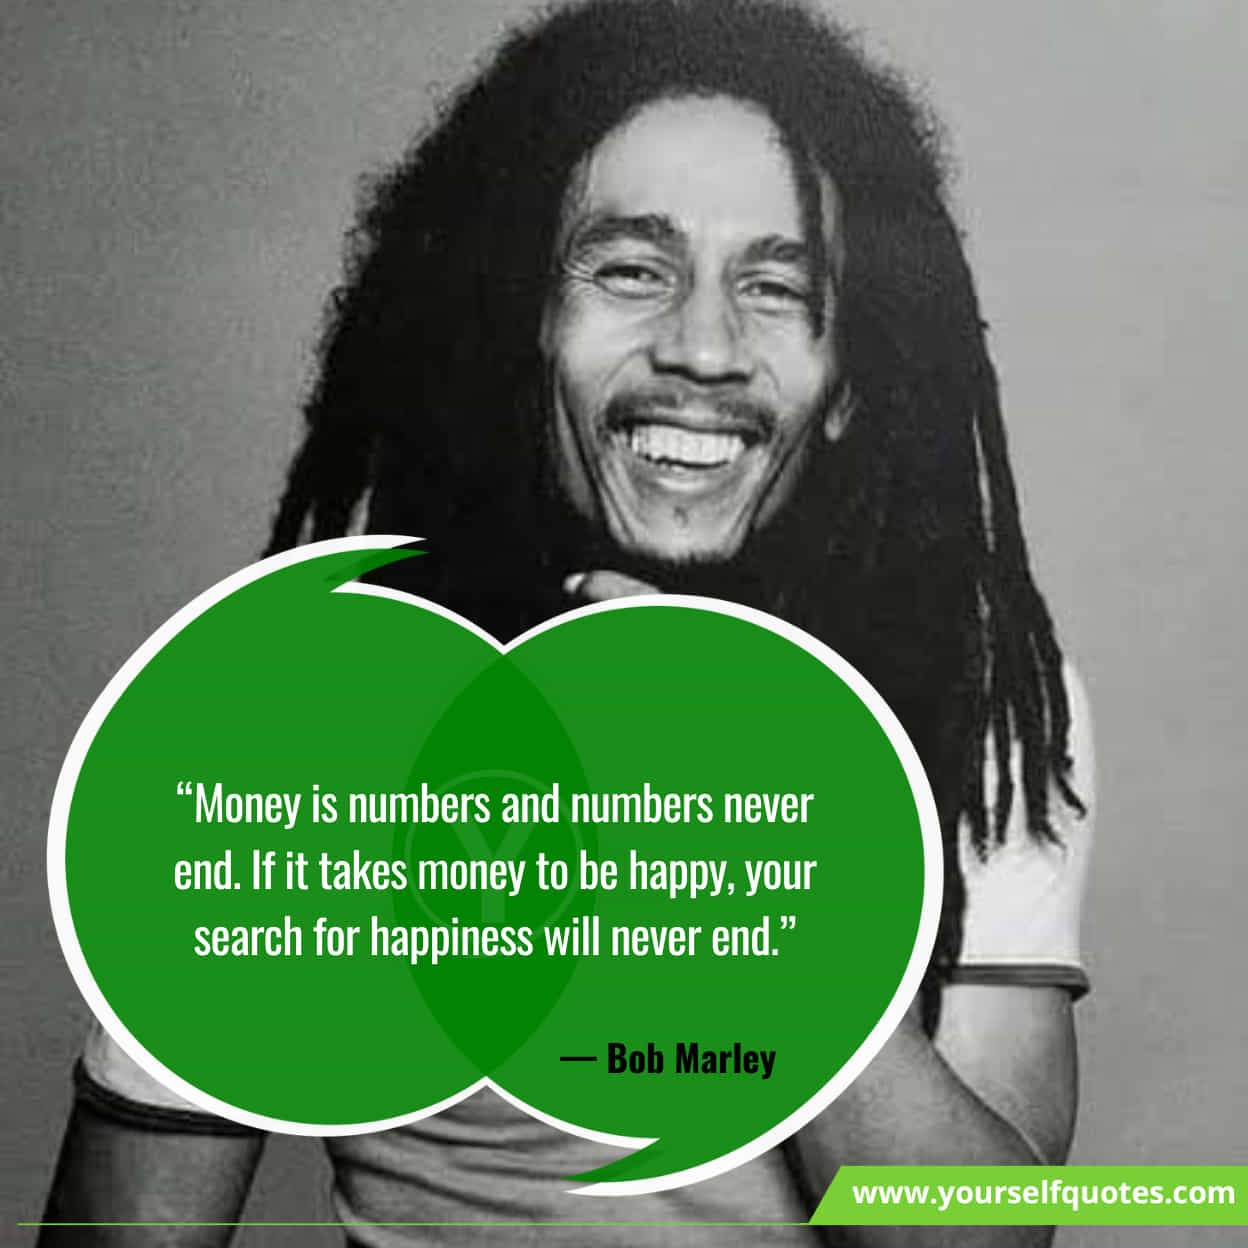 Bob Marley Quotes On Money